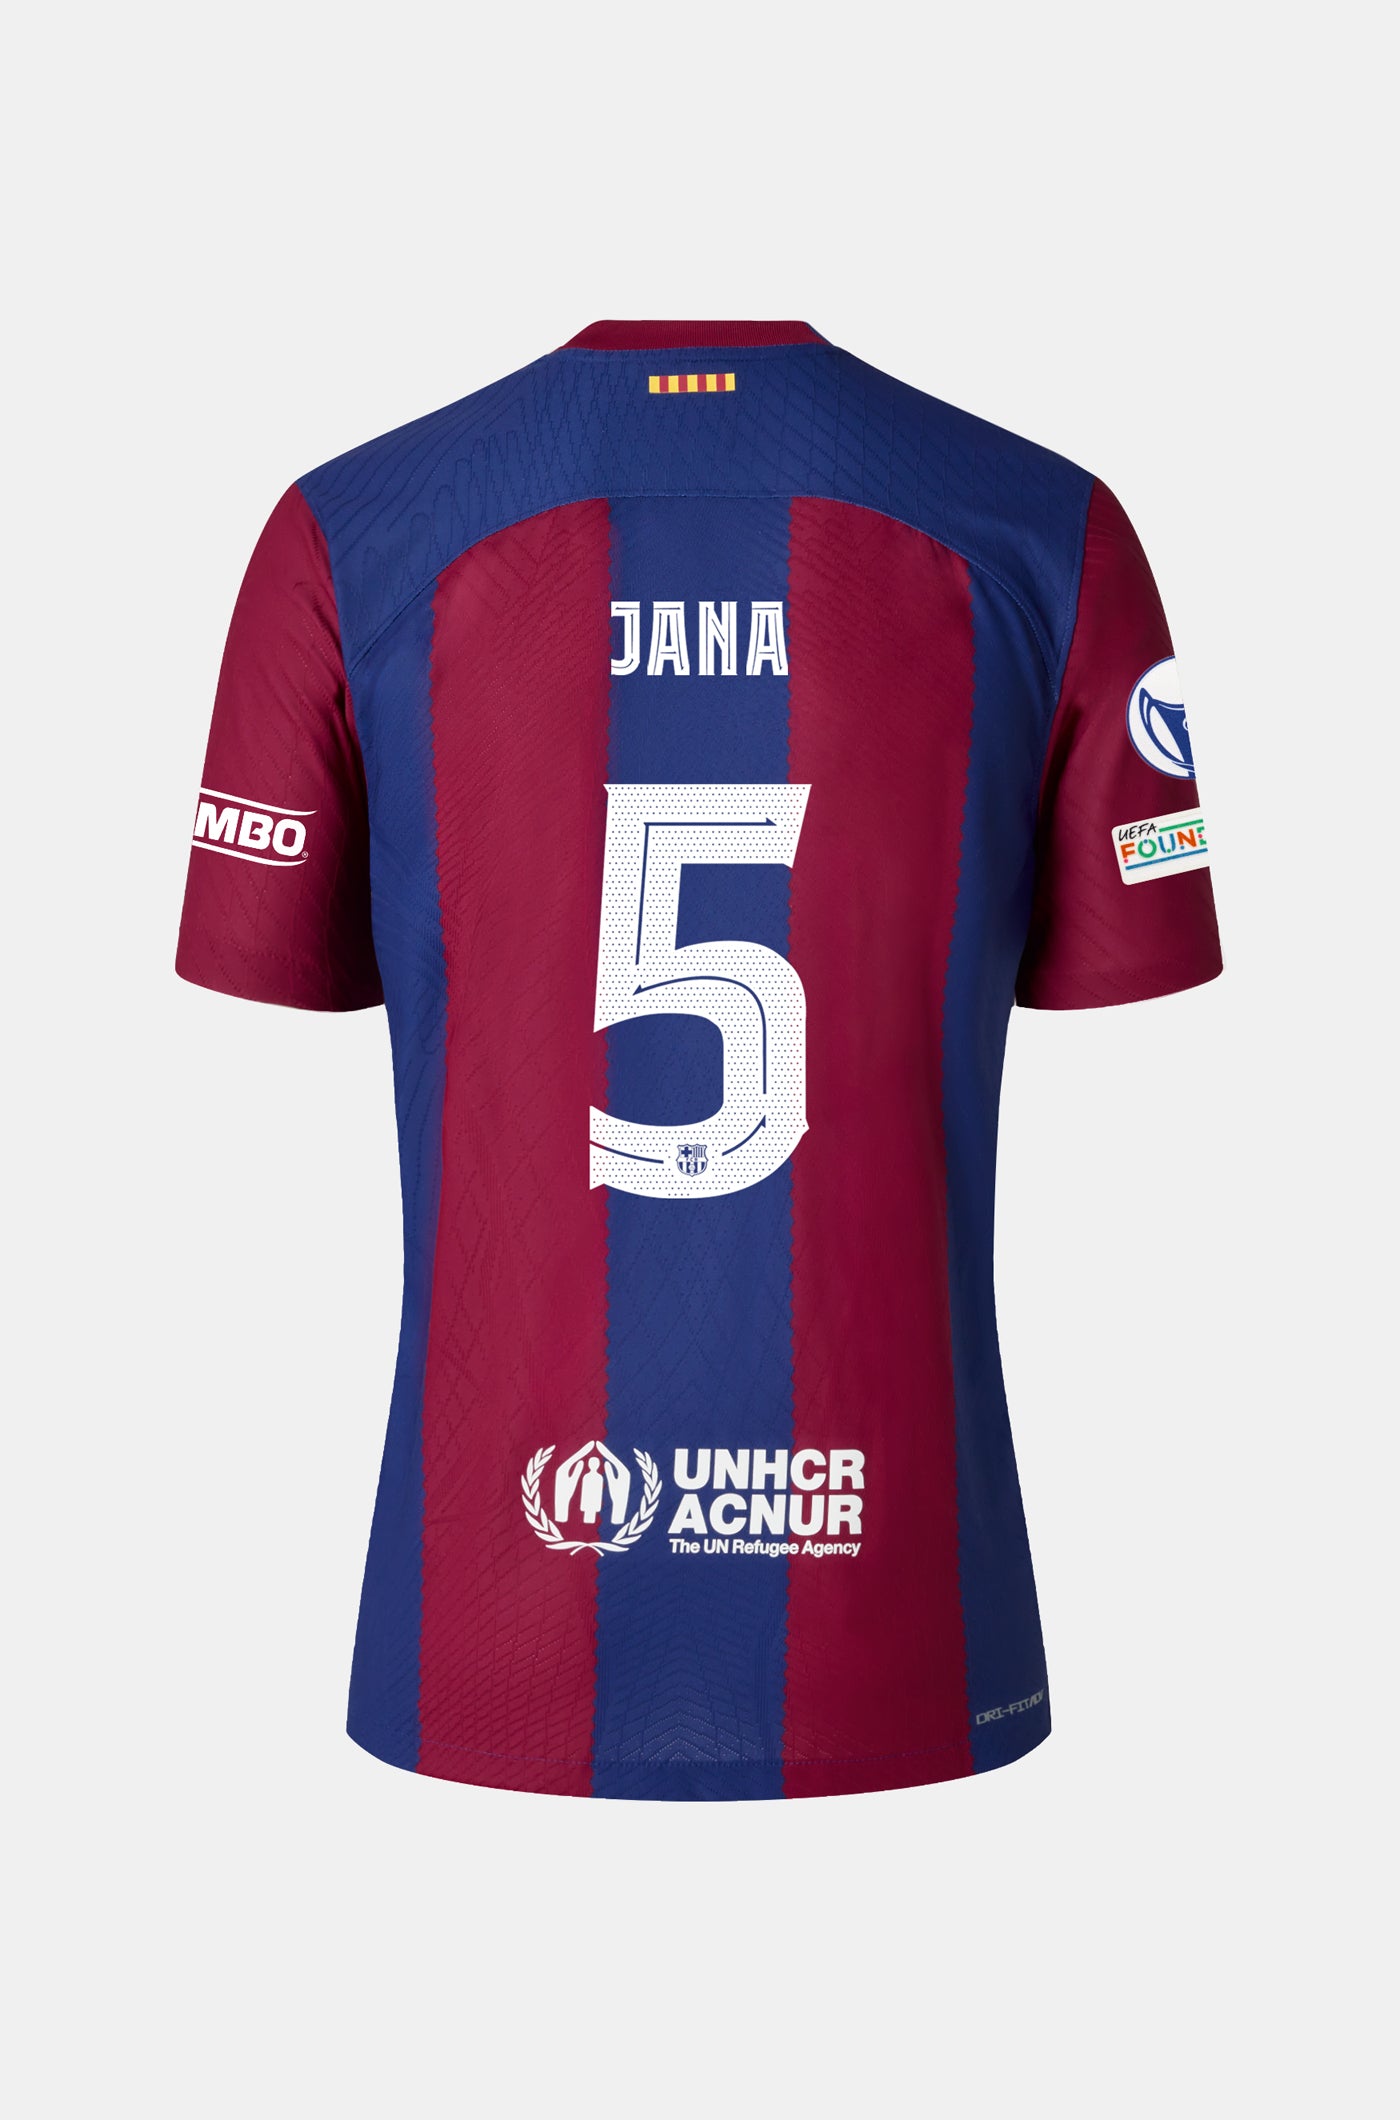 UWCL FC Barcelona Home Shirt 23/24 Player's Edition - Women - JANA